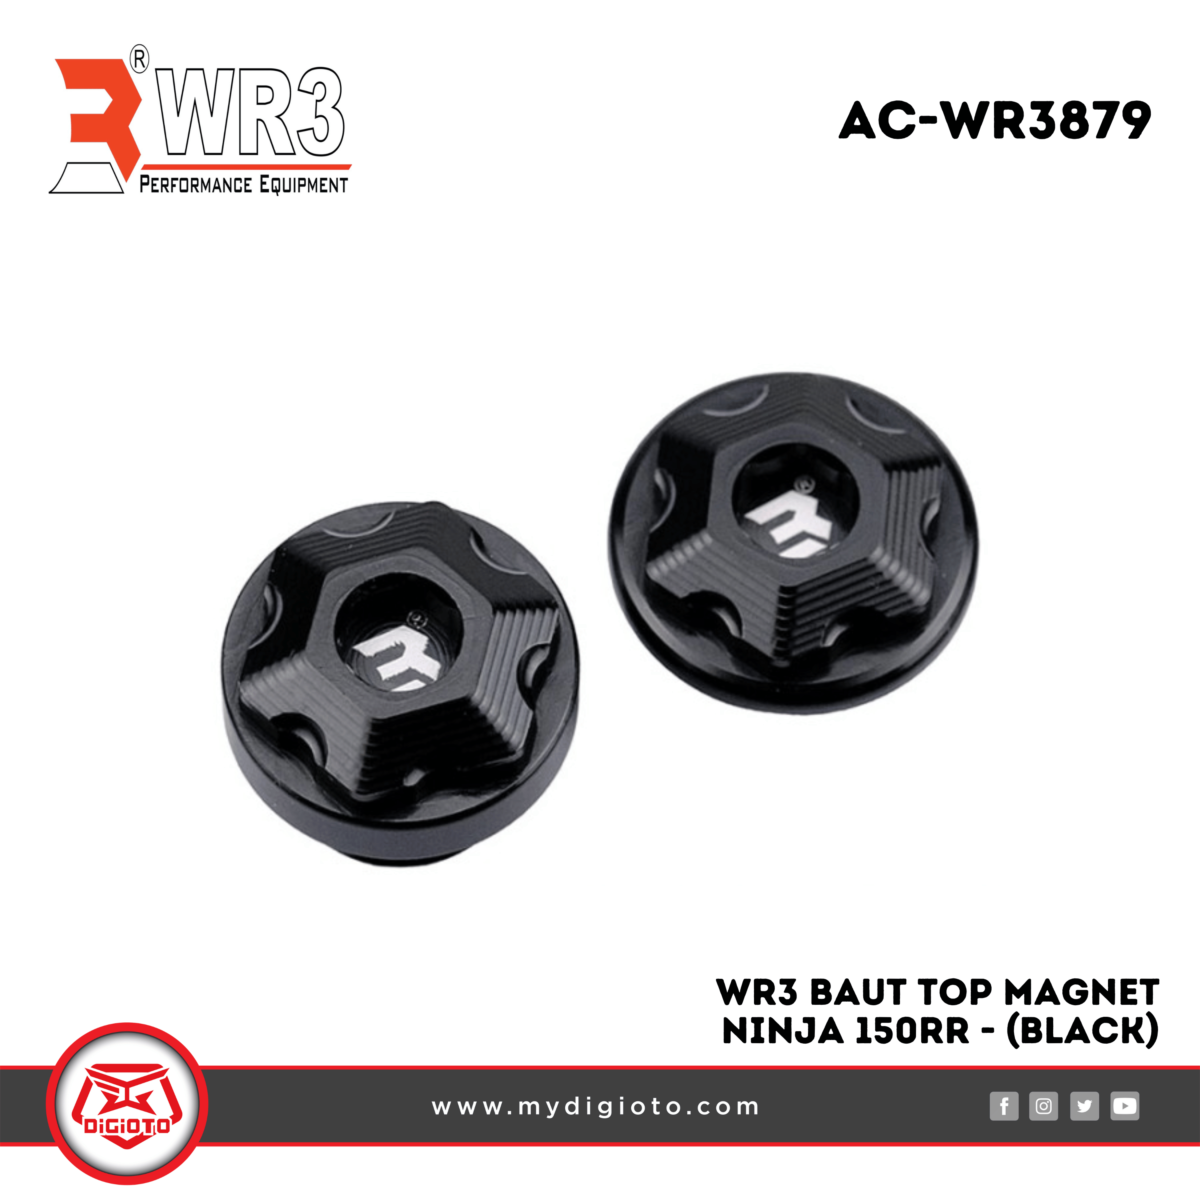 WR3 Baut Top Magnet Ninja 150RR - Black